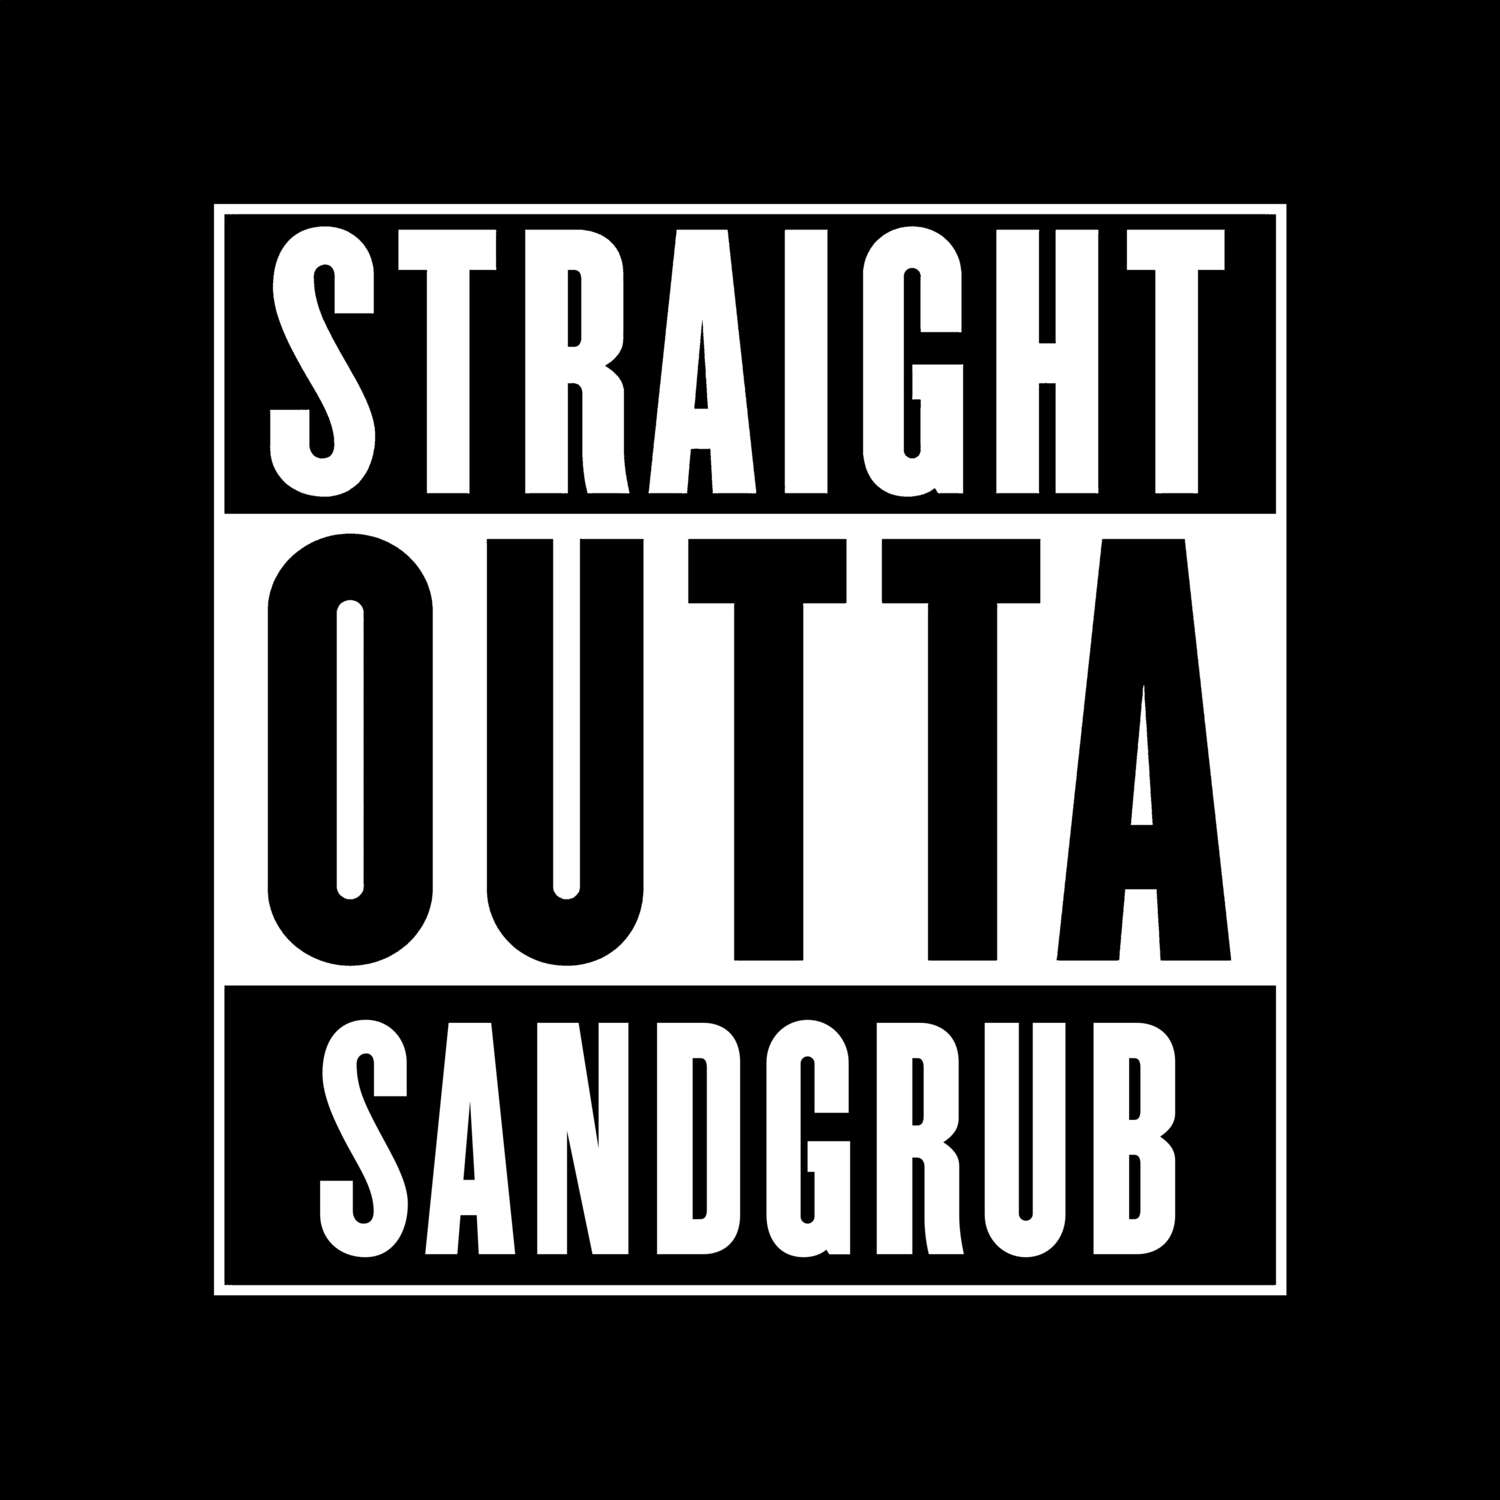 Sandgrub T-Shirt »Straight Outta«